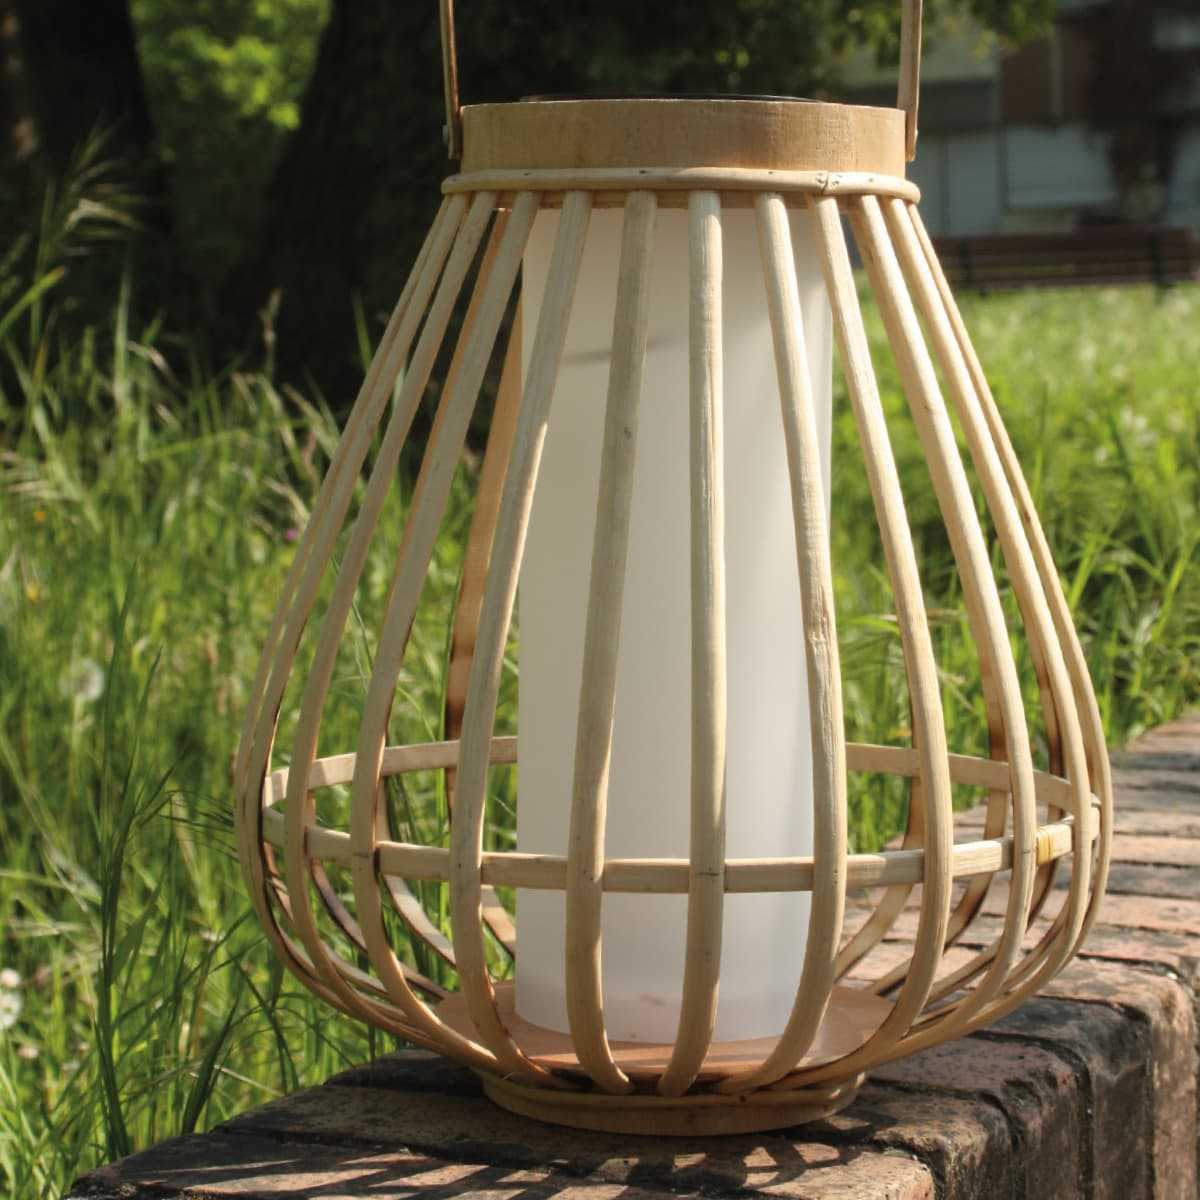 springvand Wedge Spis aftensmad Lampe solaire en bambou